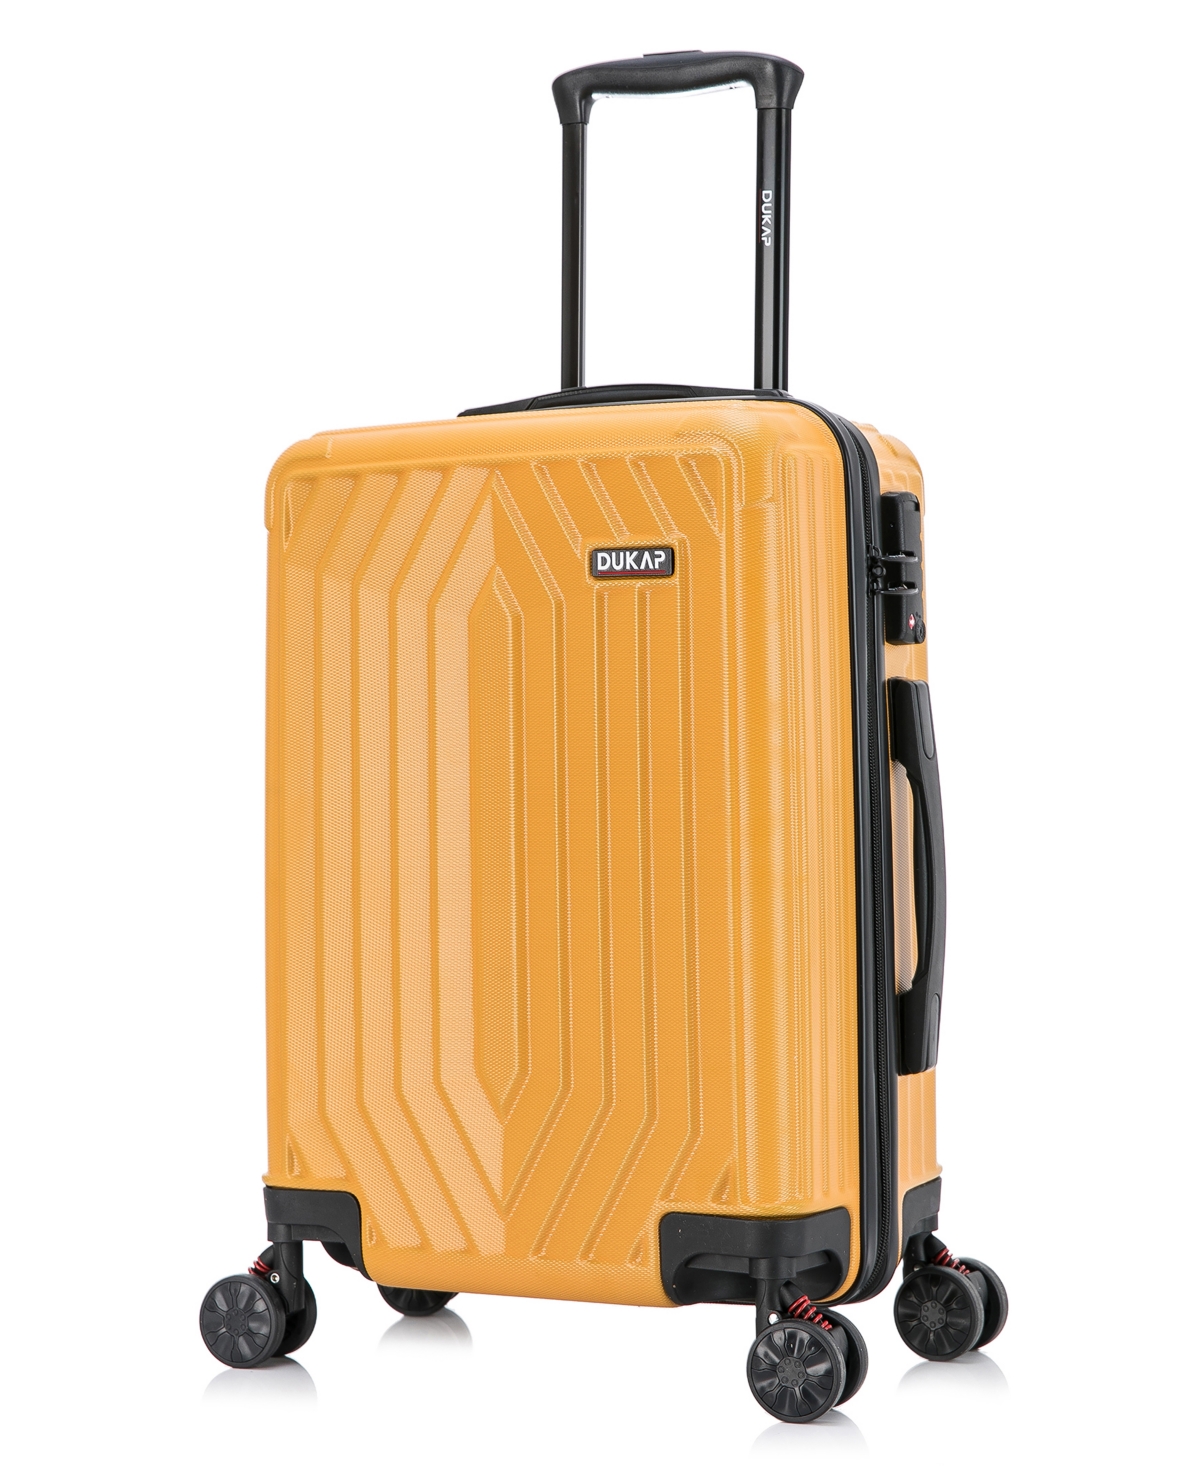 Stratos Lightweight Hardside Spinner Luggage, 20" - Blue